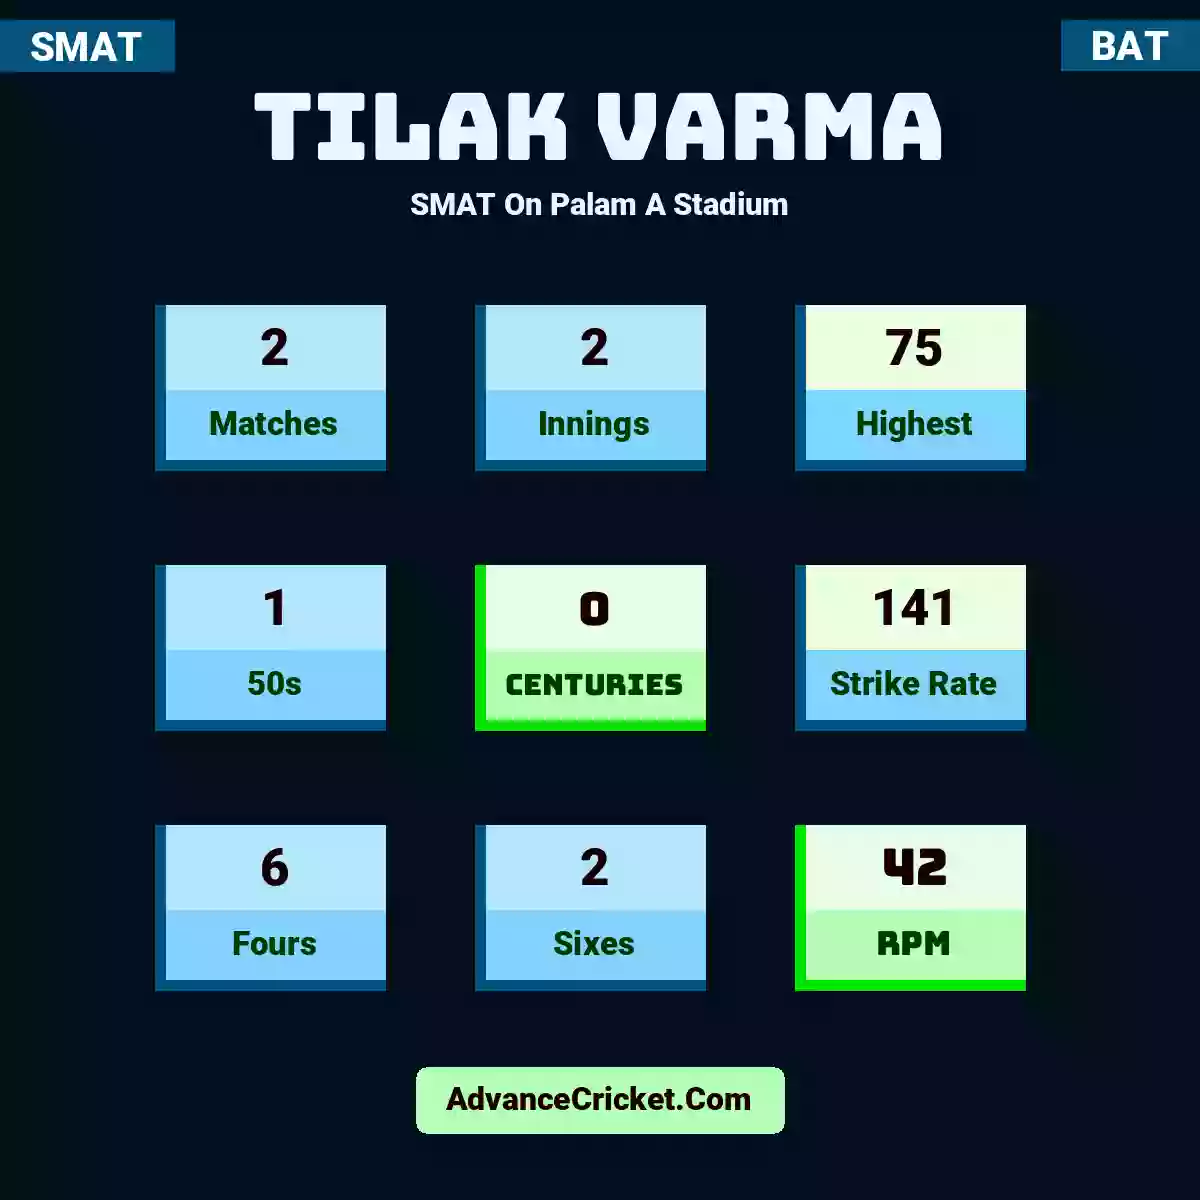 Tilak Varma SMAT  On Palam A Stadium, Tilak Varma played 2 matches, scored 75 runs as highest, 1 half-centuries, and 0 centuries, with a strike rate of 141. T.Varma hit 6 fours and 2 sixes, with an RPM of 42.